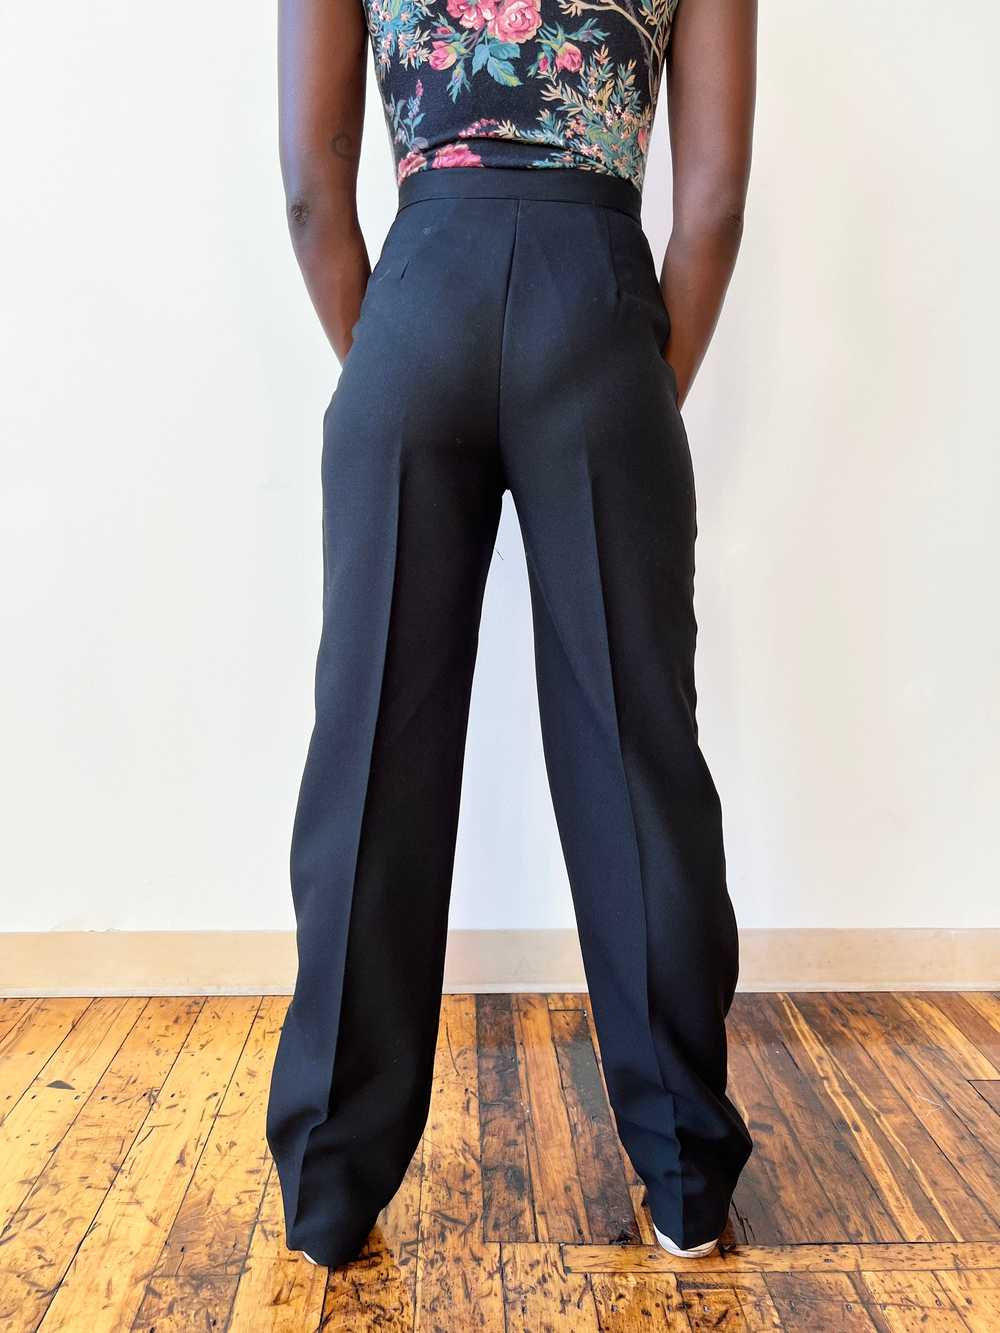 70’s High Rise Flare Black Trouser Pants Slacks - image 1